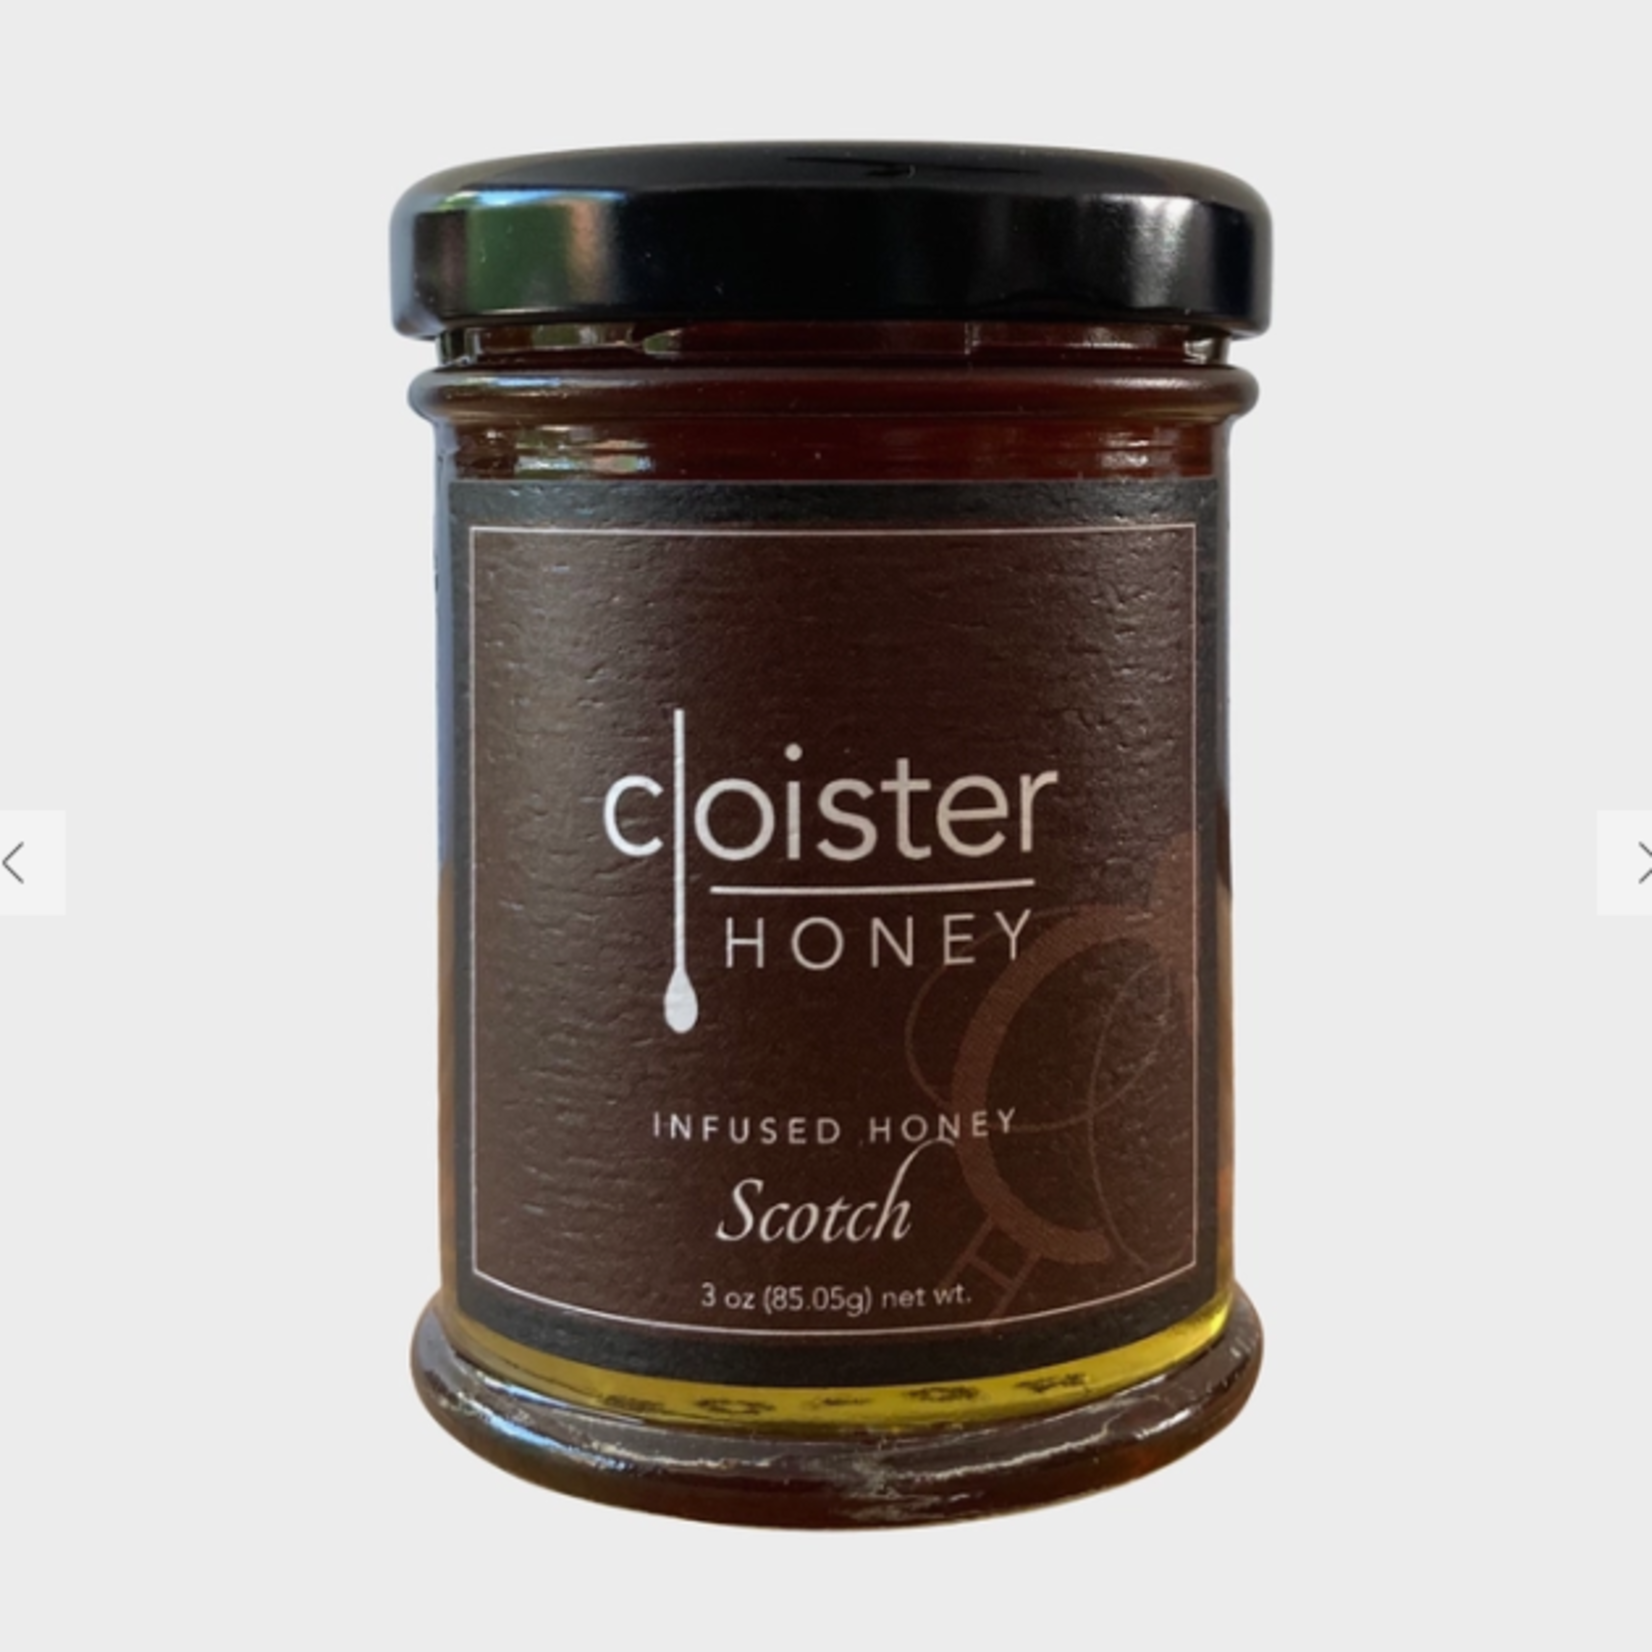 Cloister Honey Scotch Infused Honey 3oz